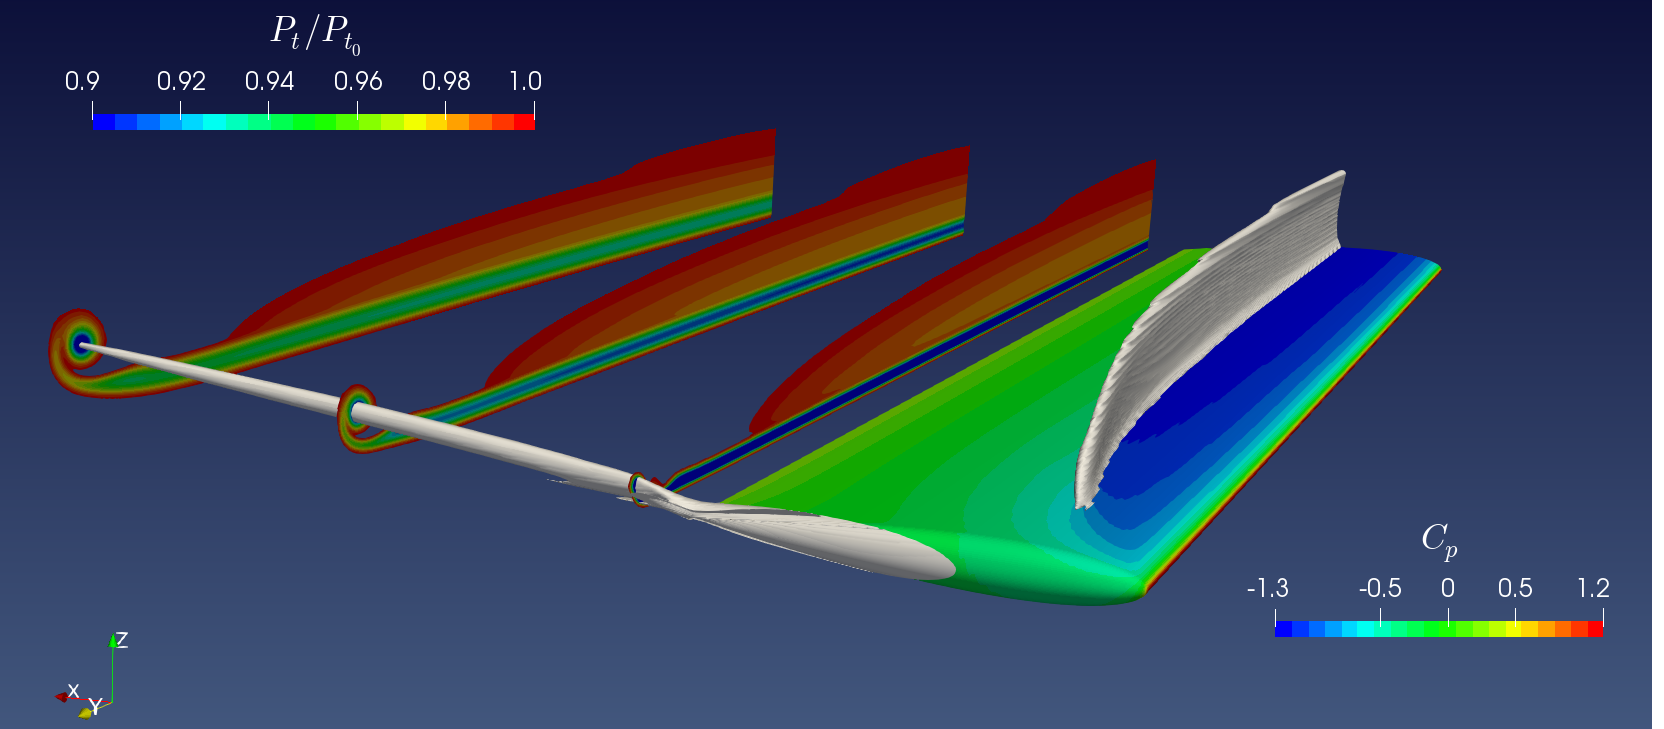 Classical aerodynamic analysis